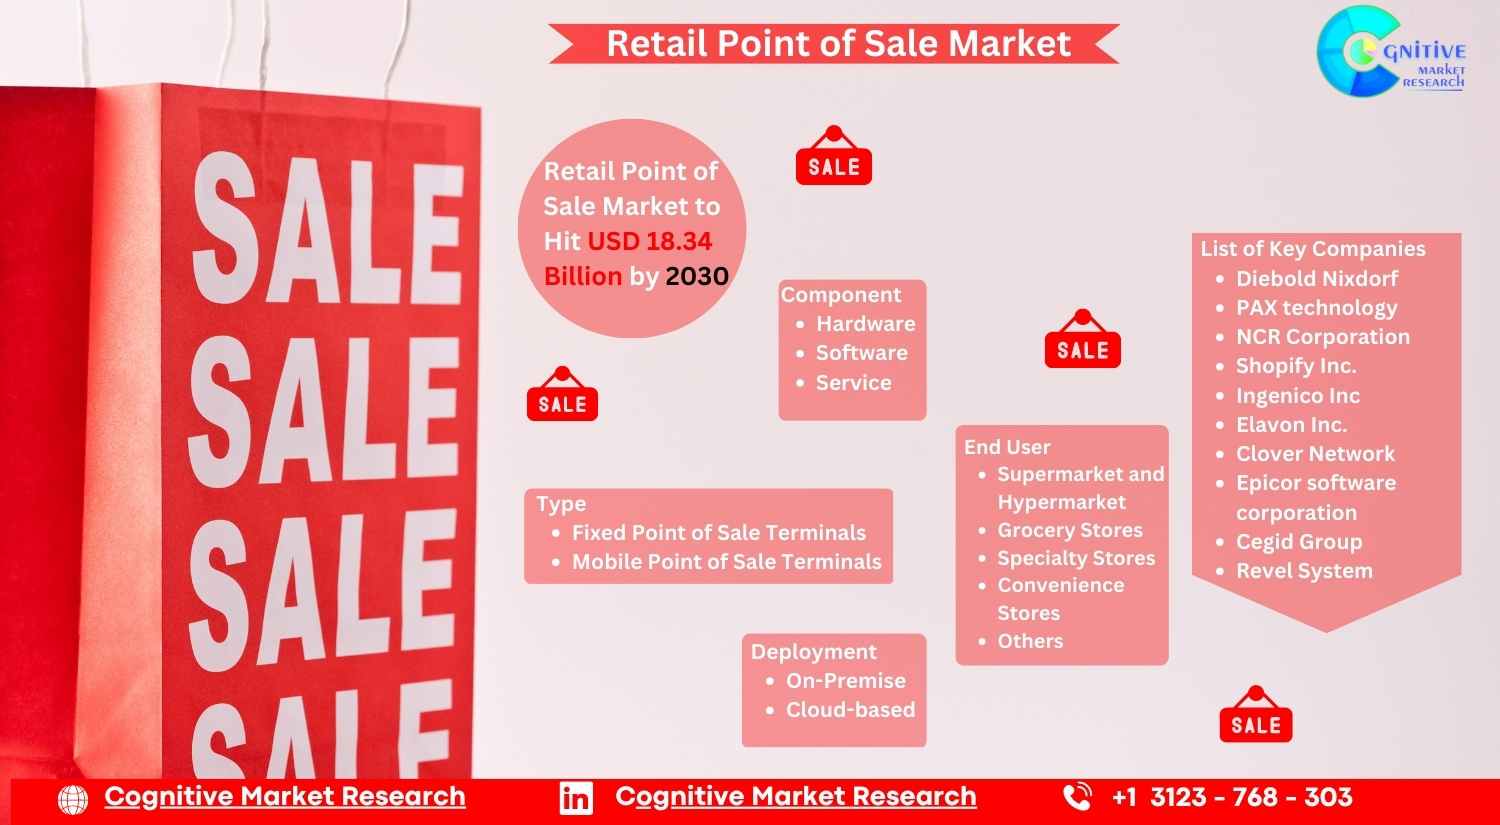 Retail Point of Sale Market to Reach USD 18.34 Billion by 2030